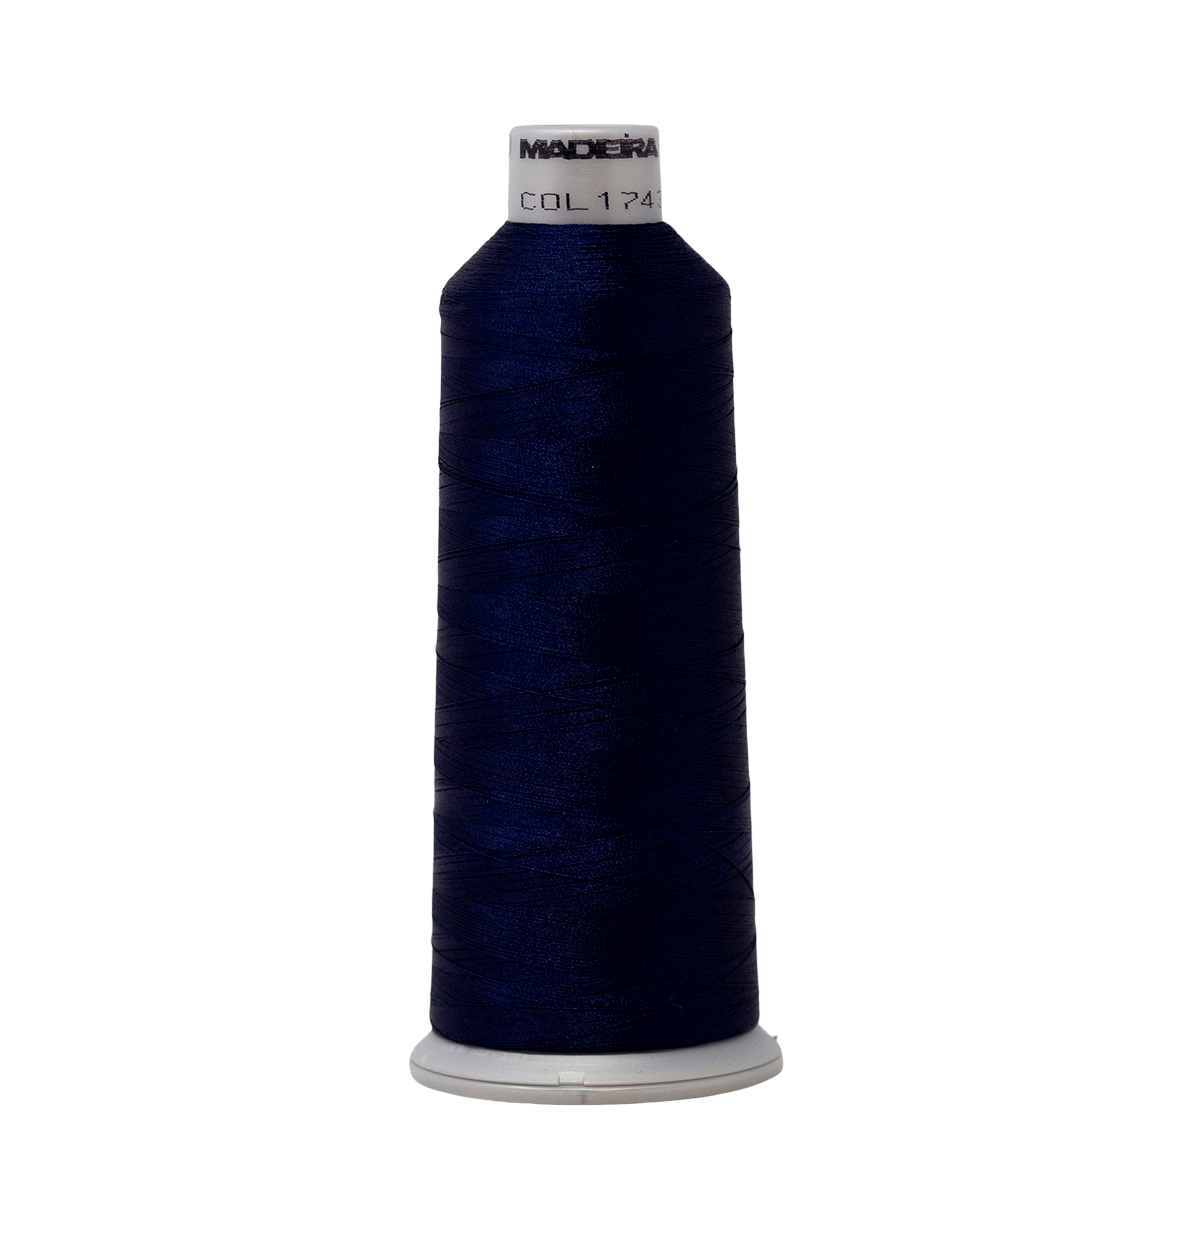 Oxford Blue 1743 #40 Weight Madeira Polyneon Thread